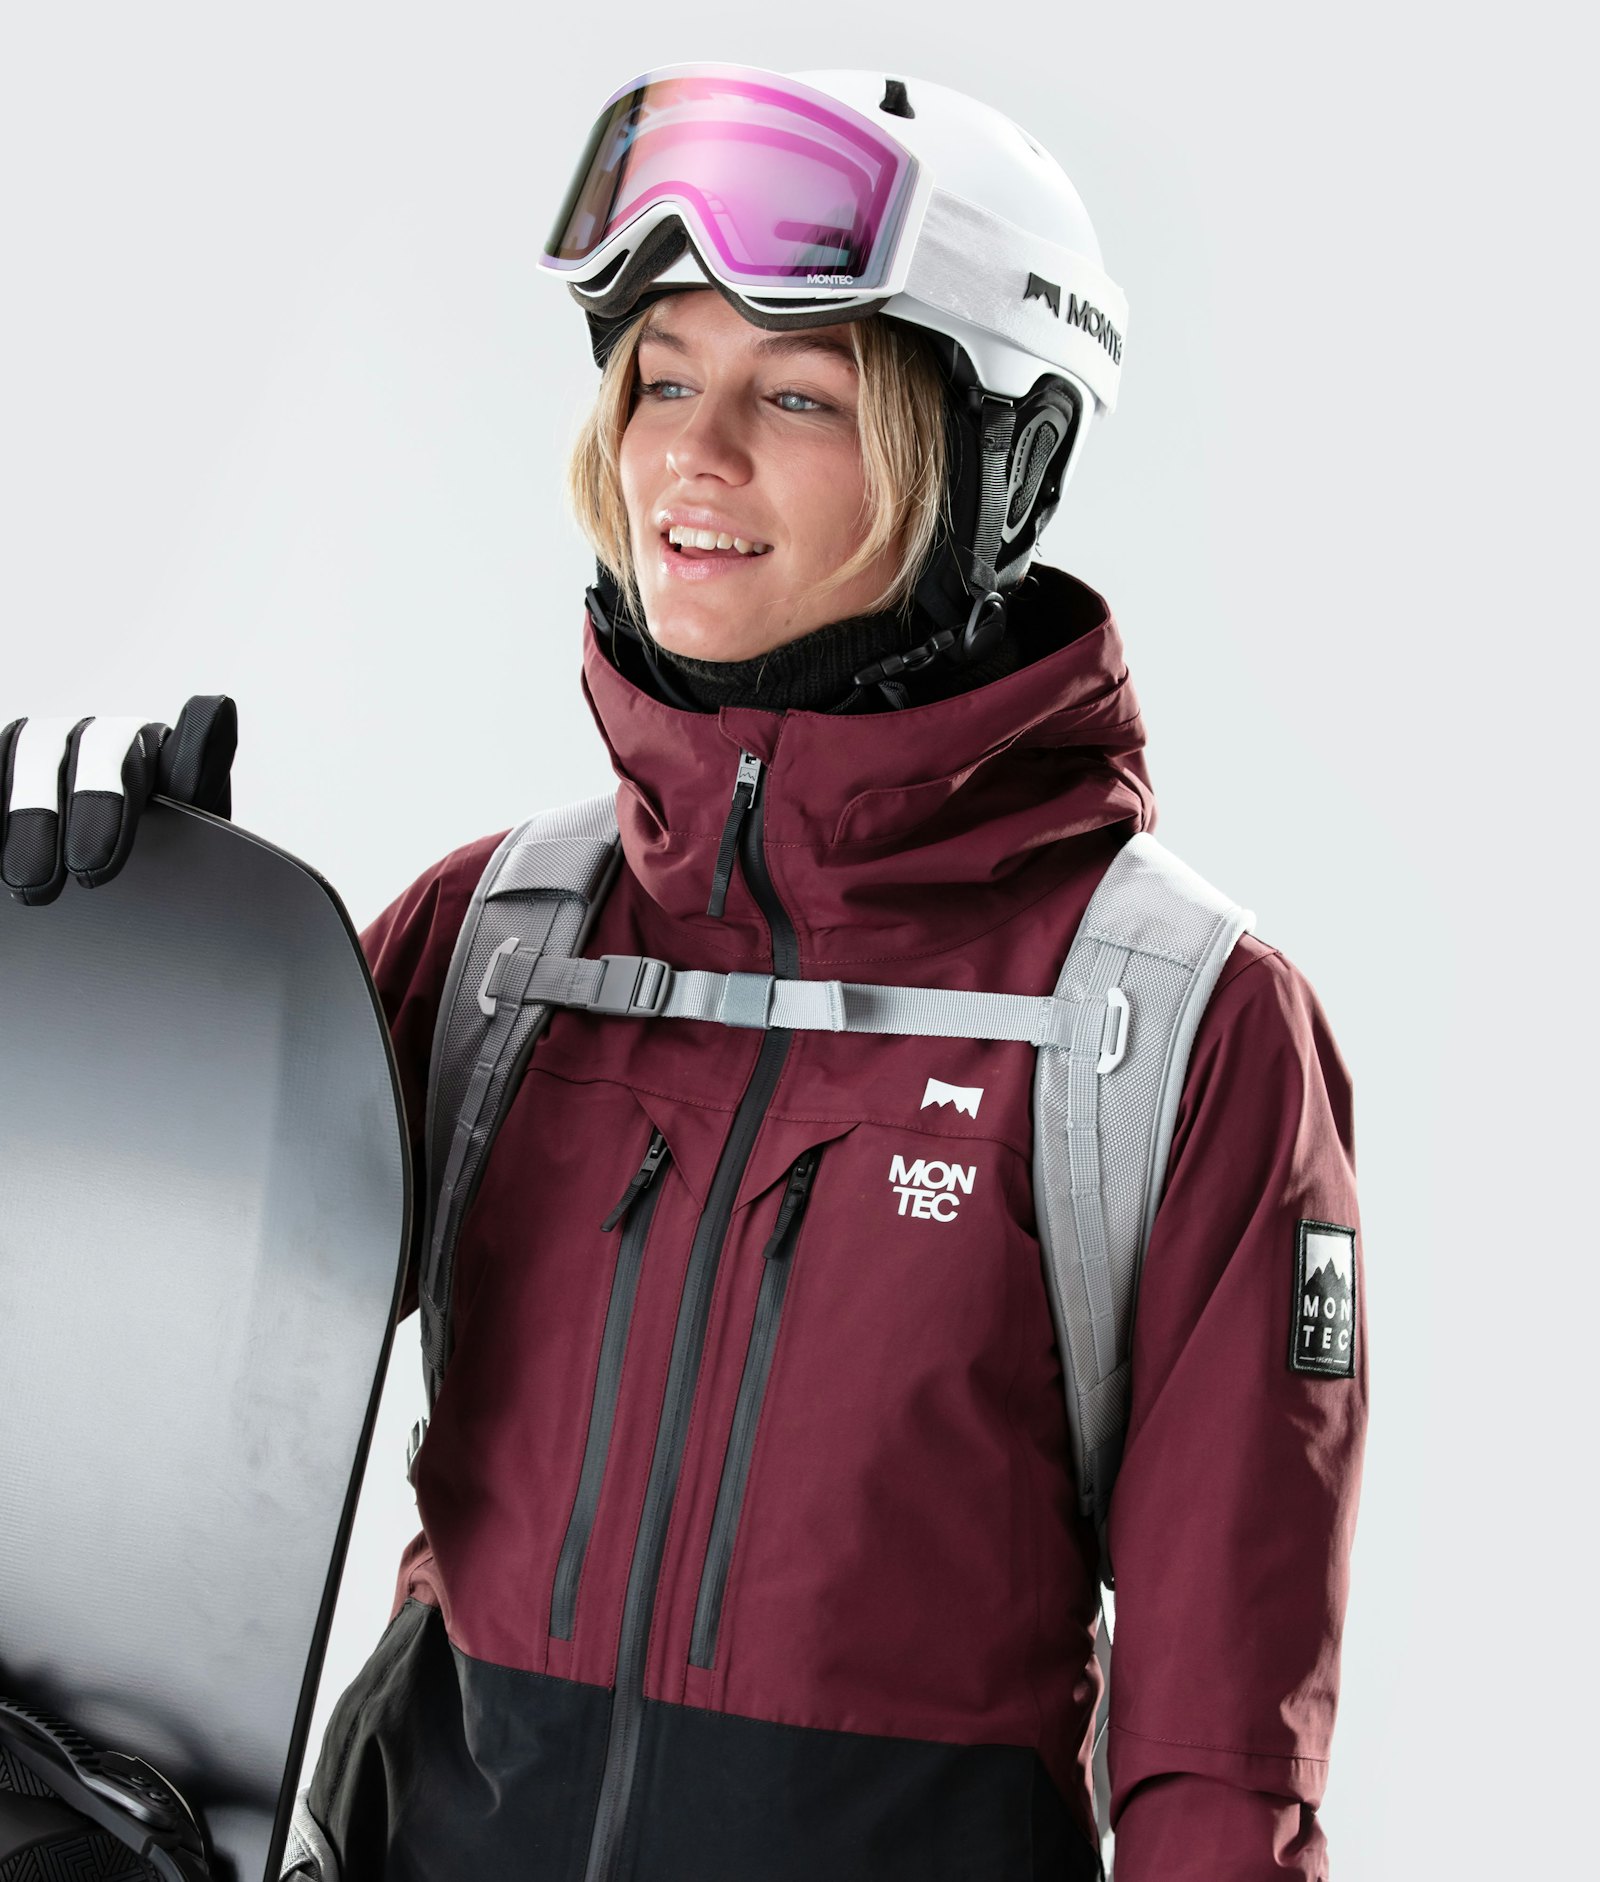 Moss W 2020 Snowboard Jacket Women Burgundy/Black Renewed